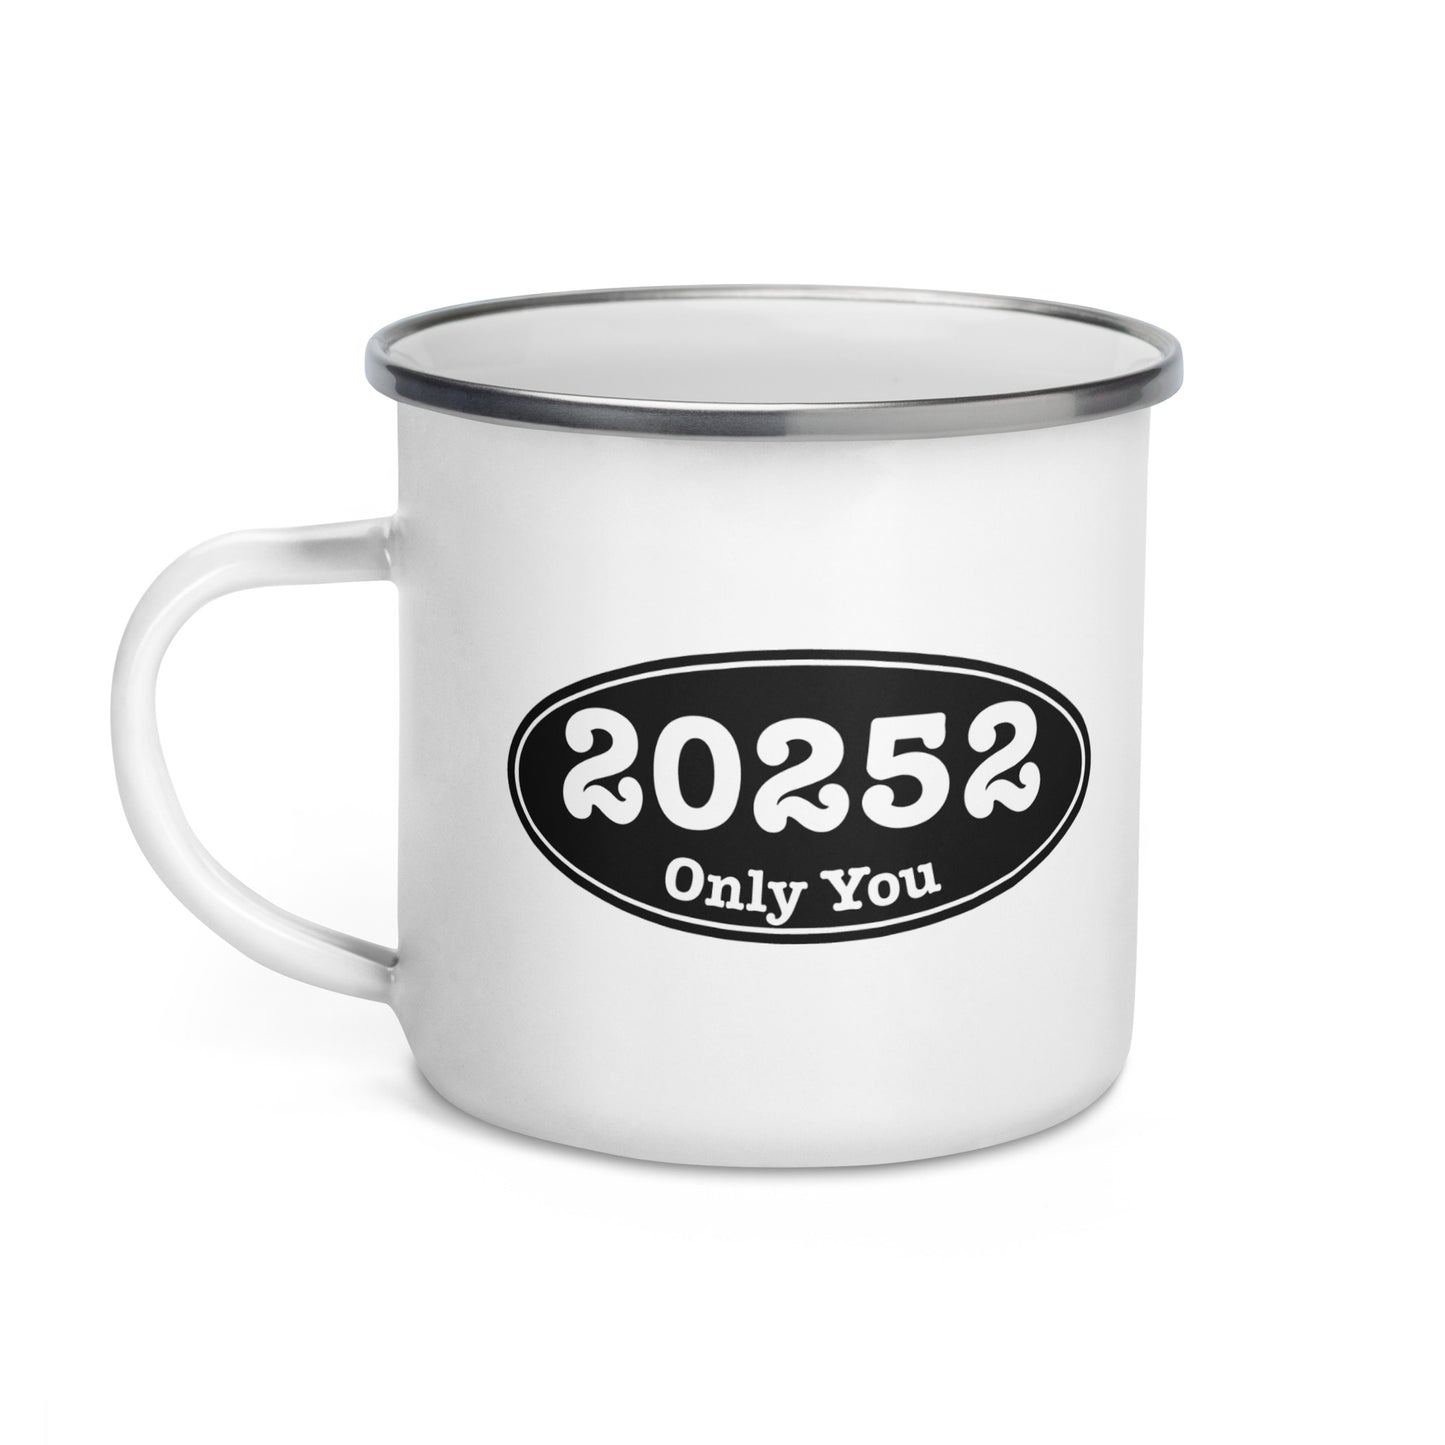 White Enamel 12 oz. Mug - 20252 Black and White Oval